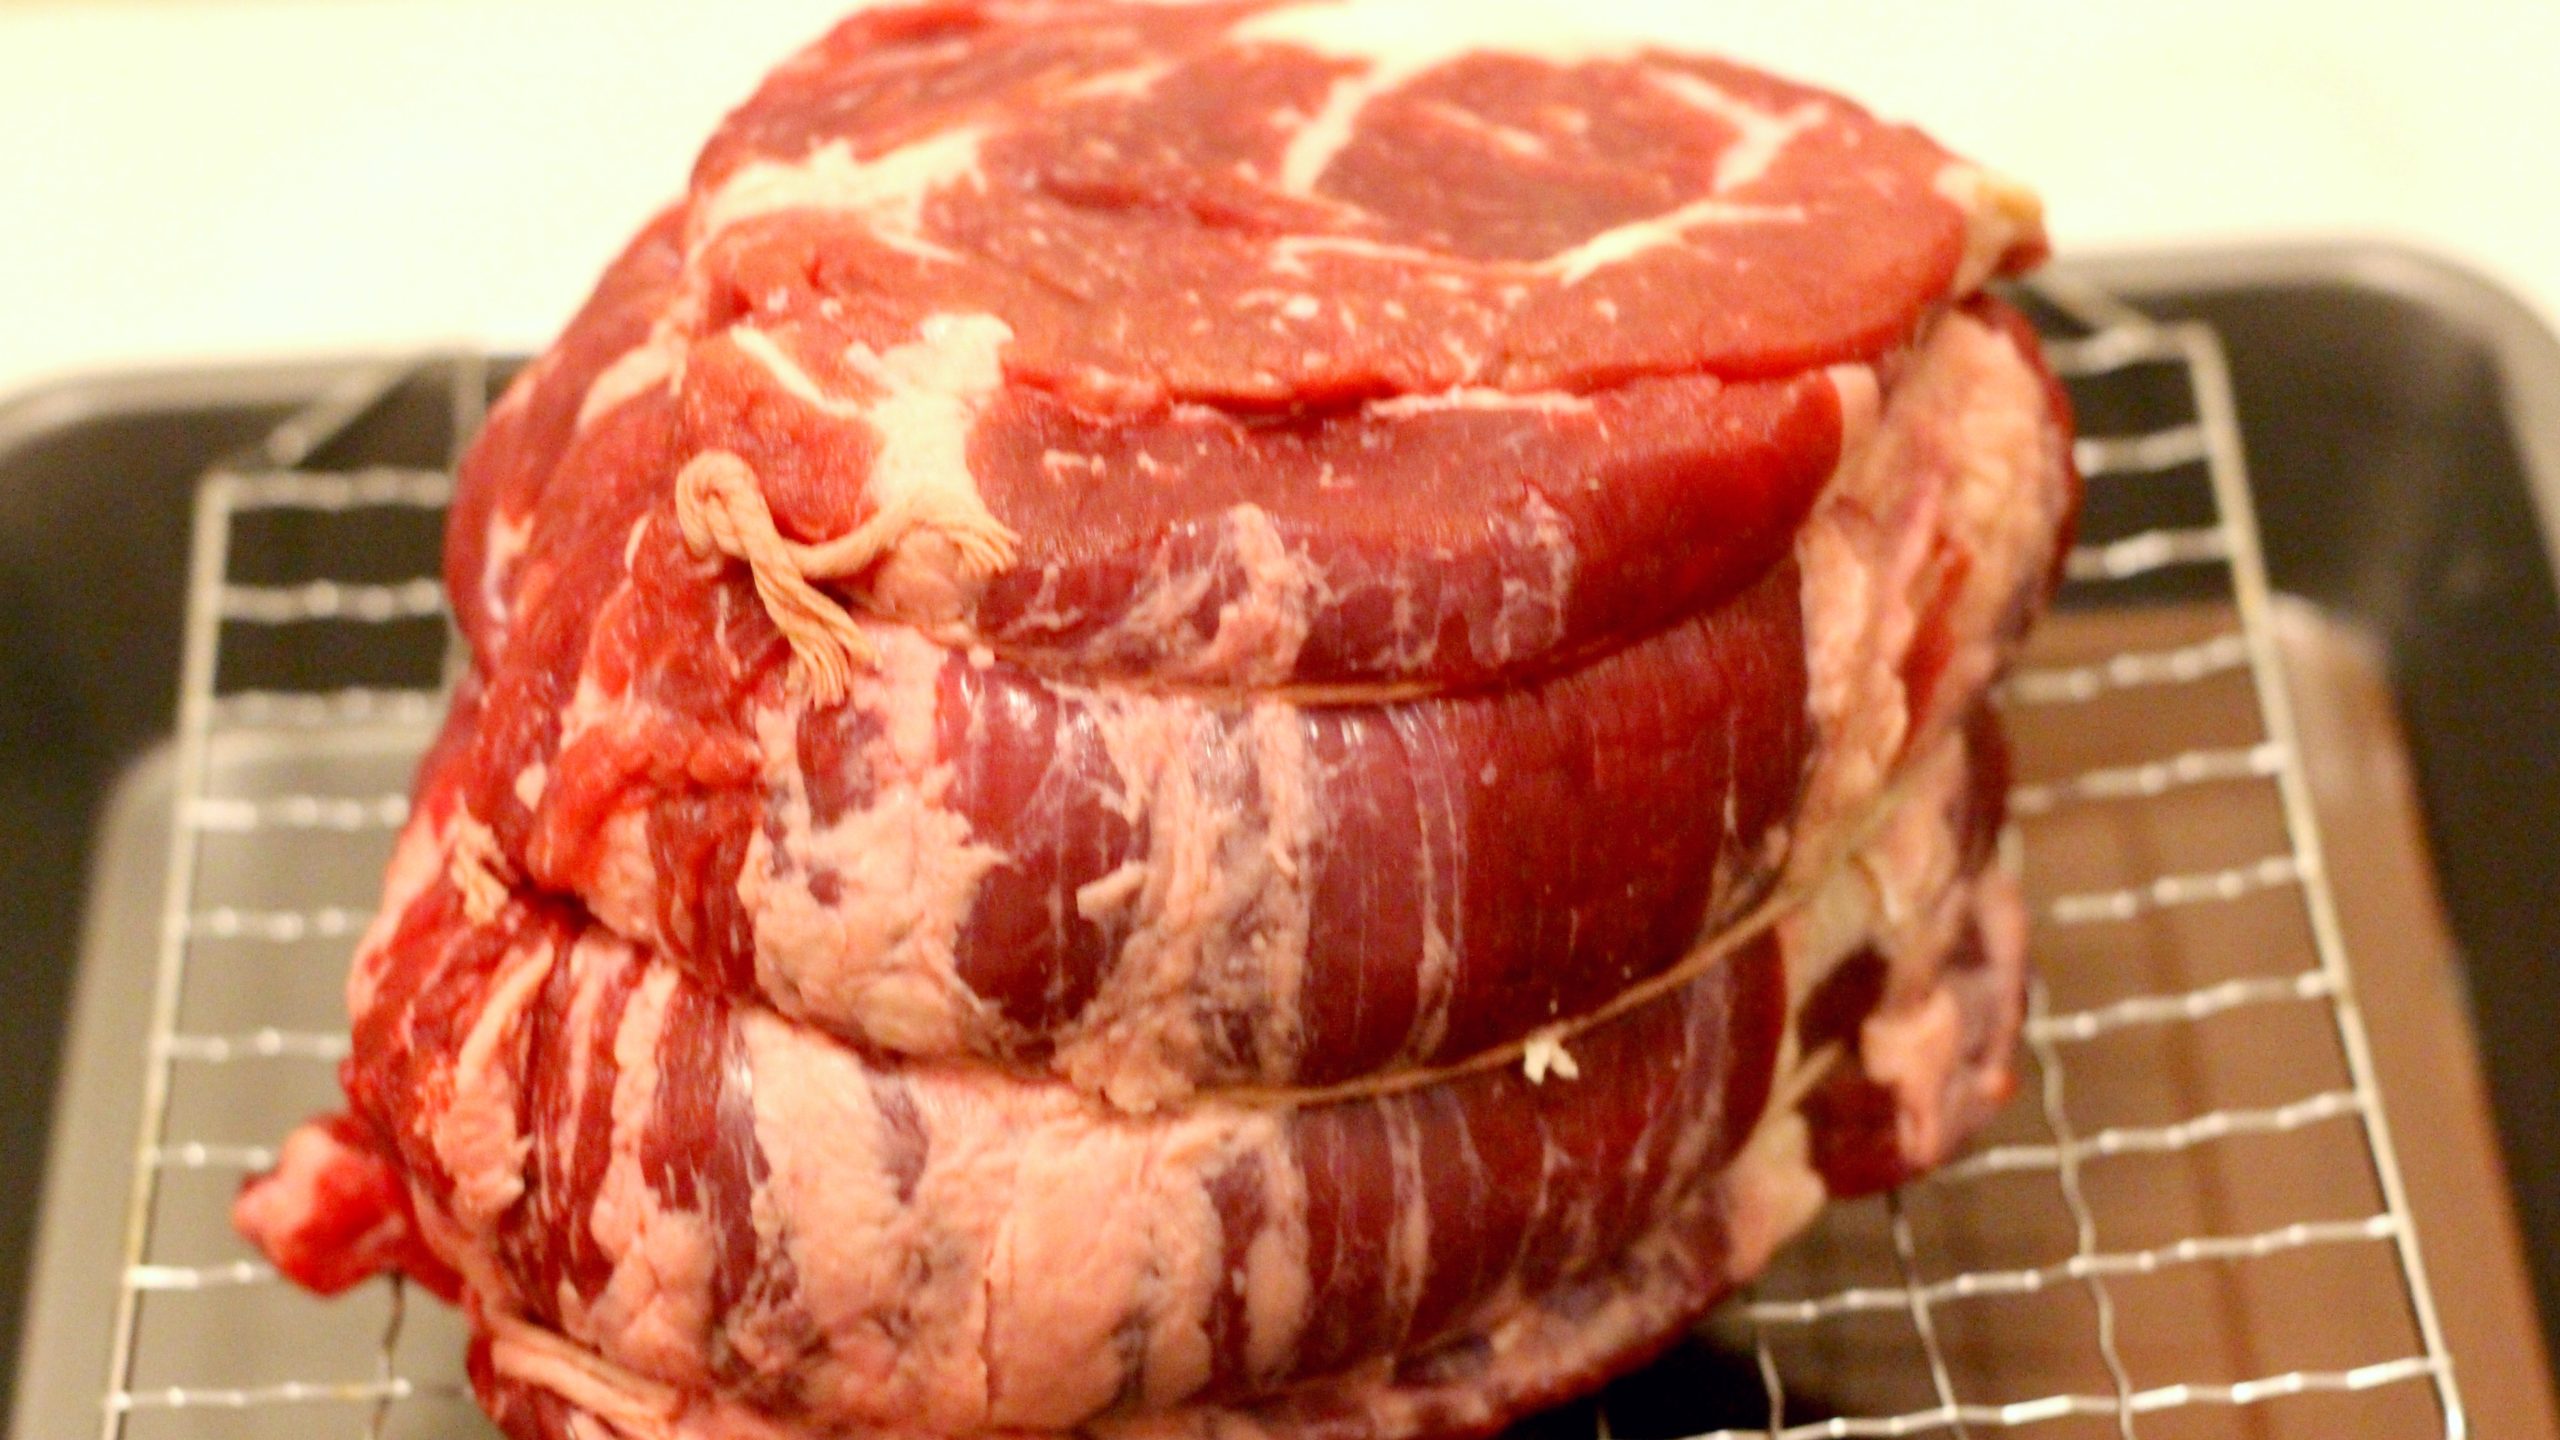 How To Make Chuck Steak Taste Like Prime Rib